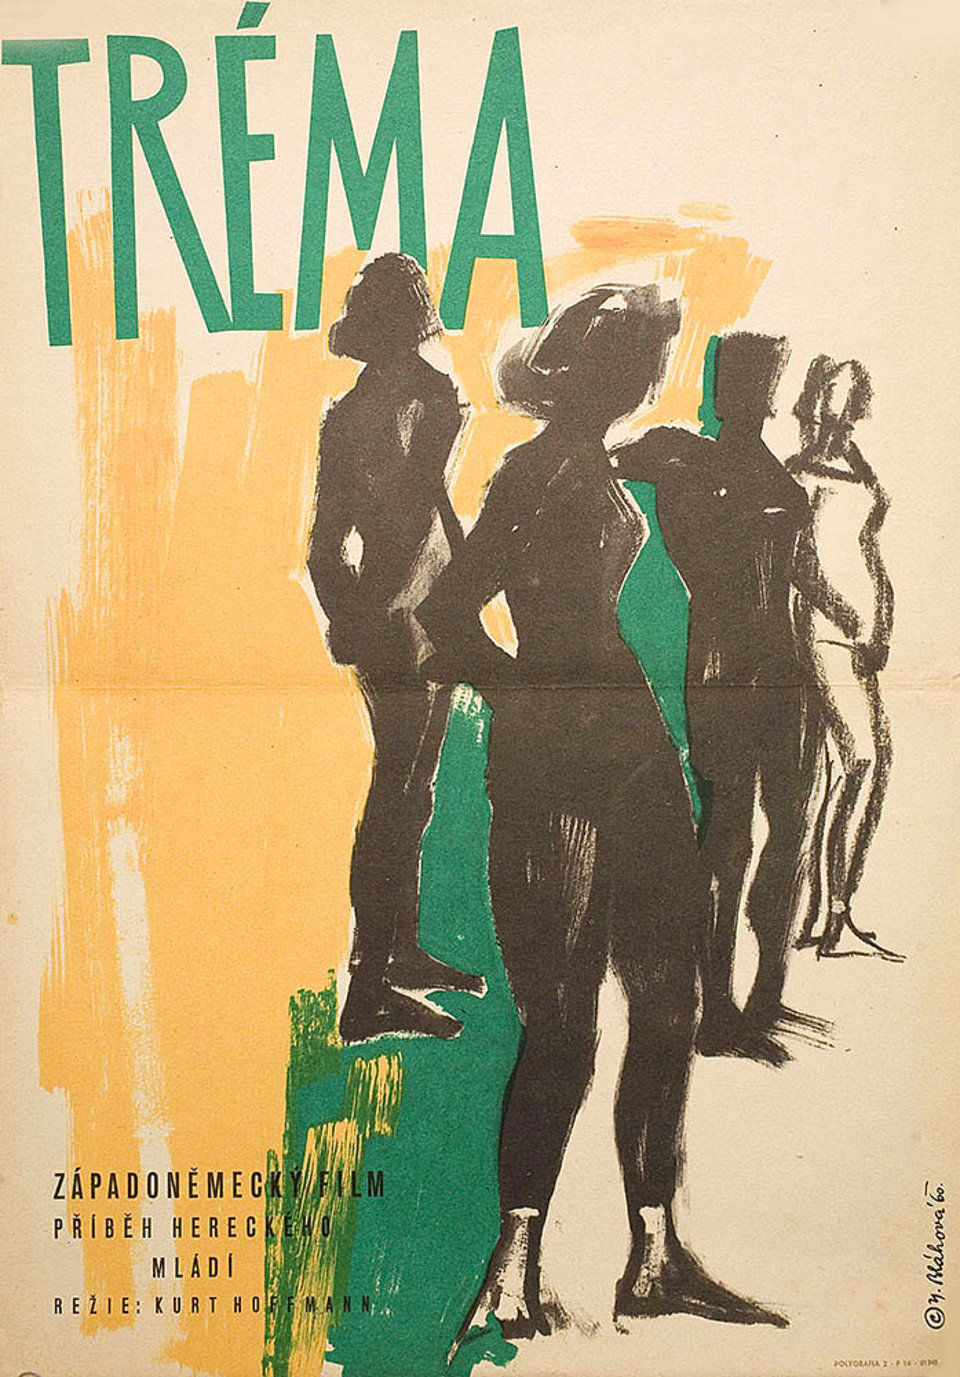 lamp-fever-1960-original-czech-republic-movie-poster